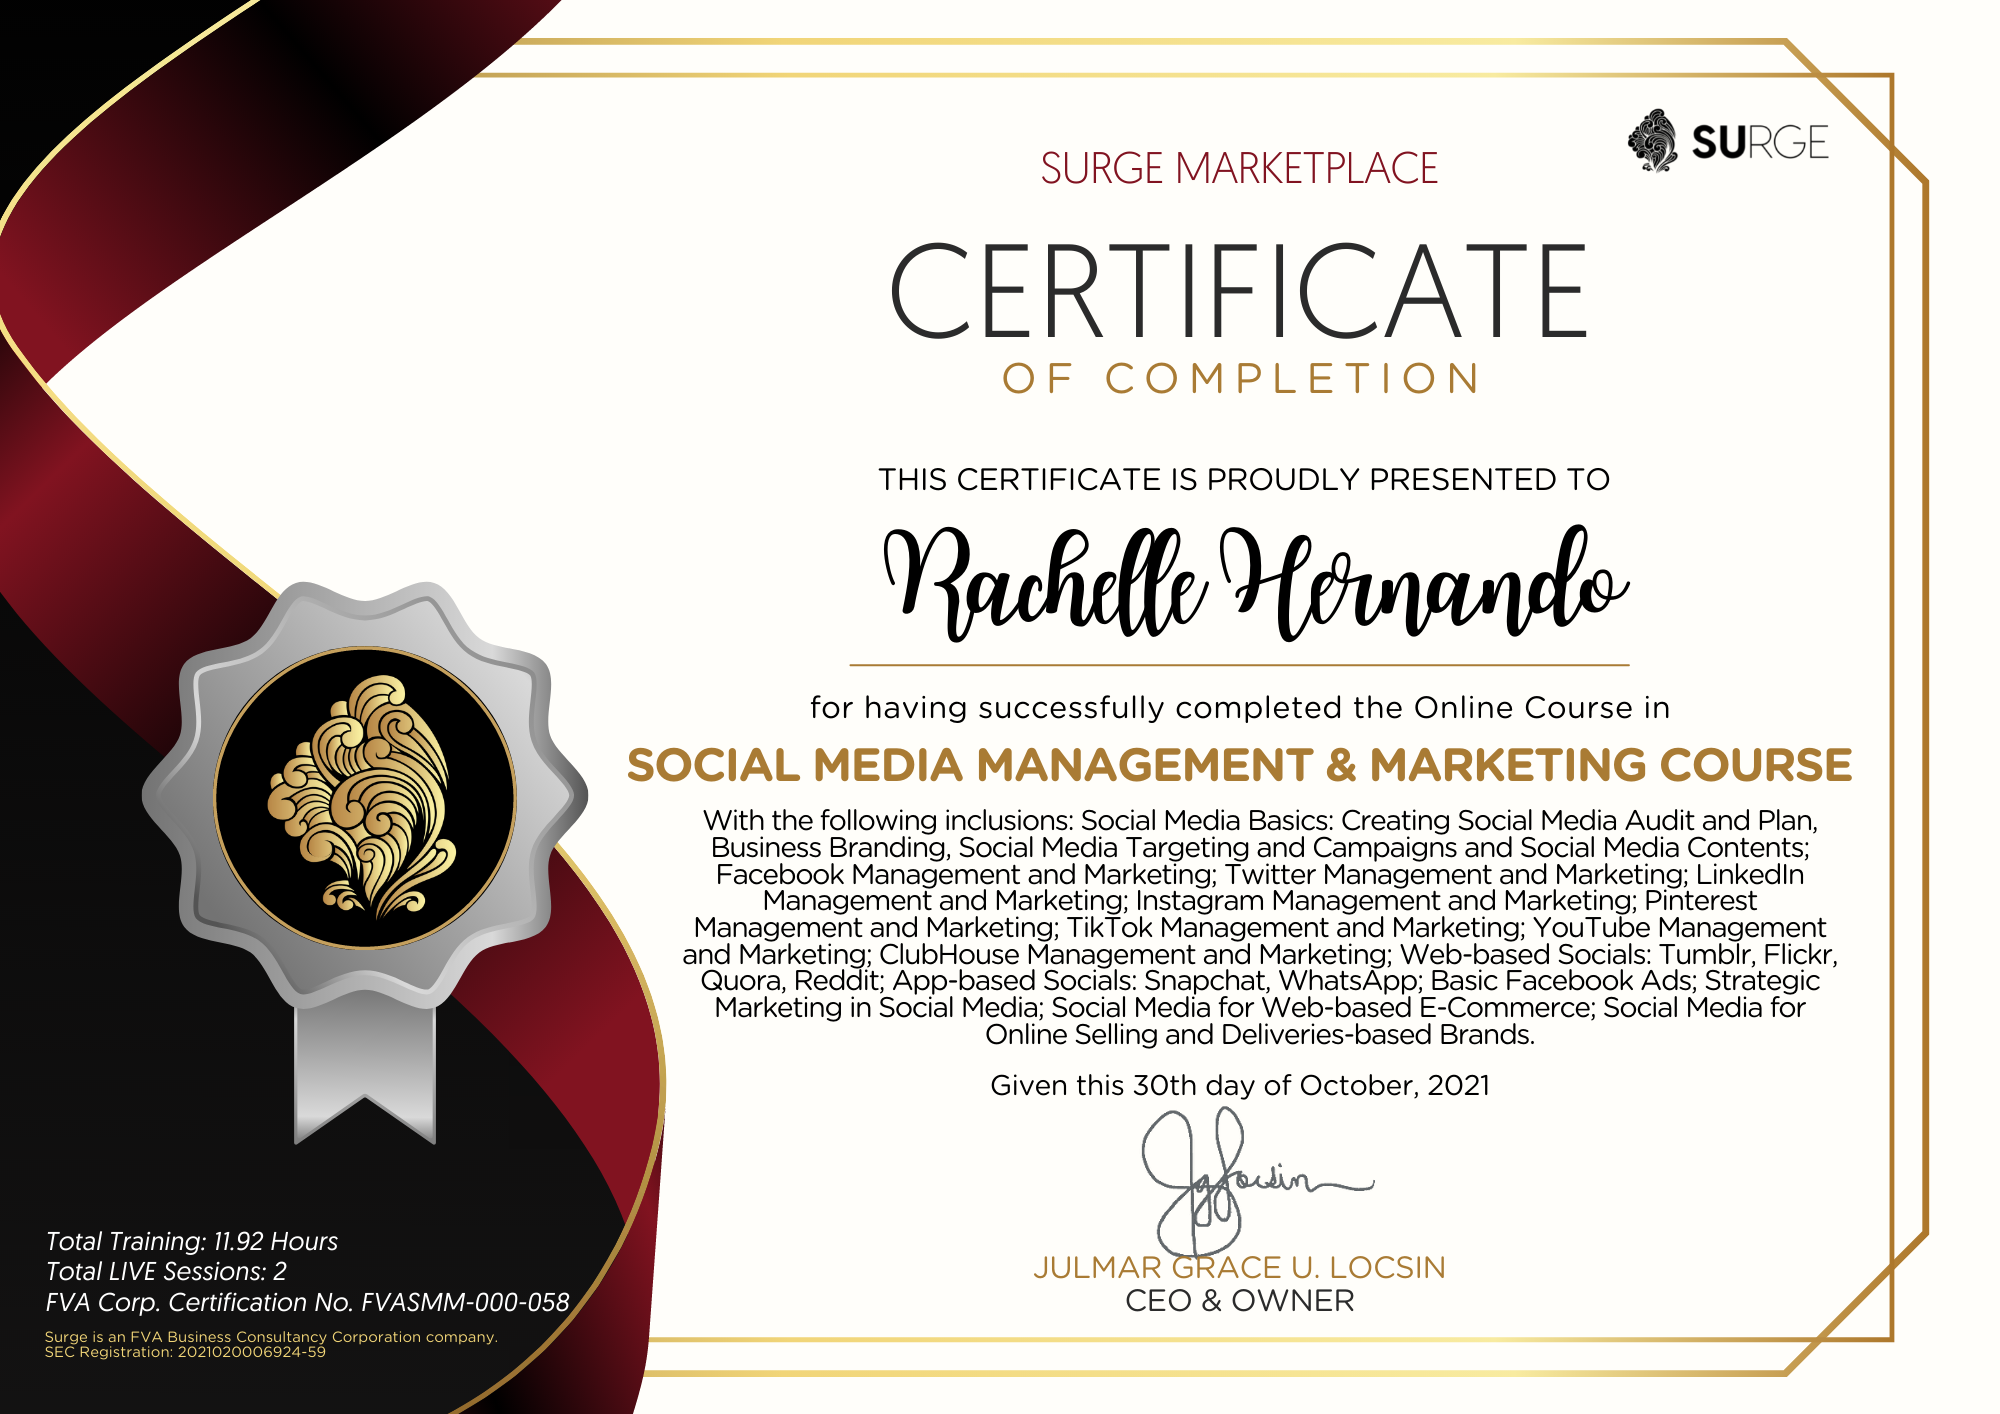 Social Media Management & Marketing Course